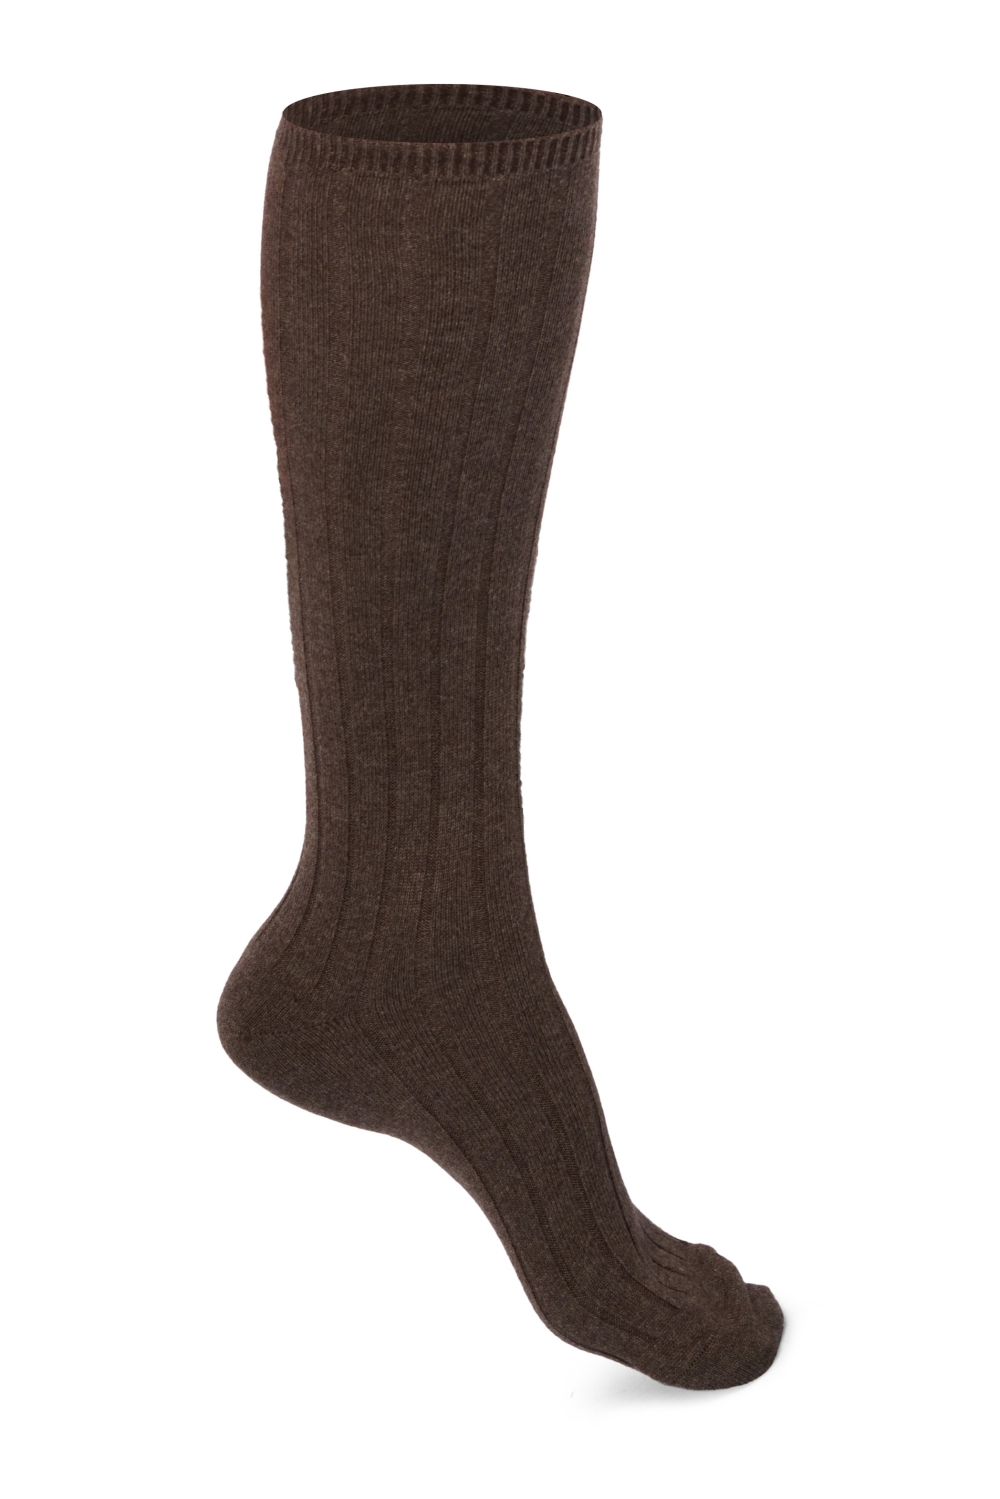 Cashmere accessories socks dragibus long m marron chine 3 5 35 38 